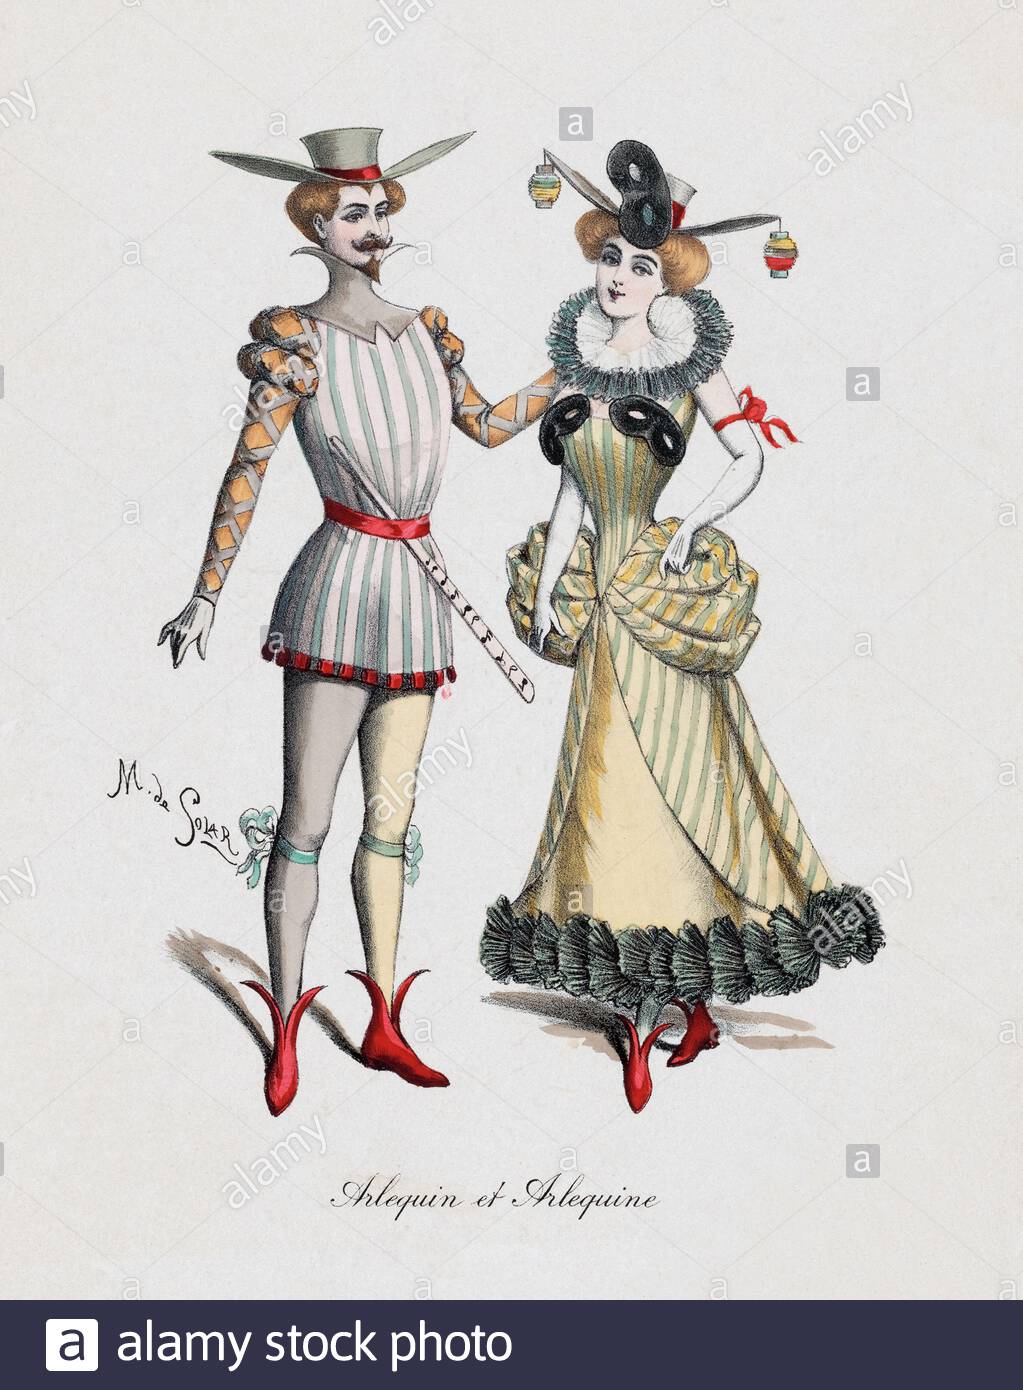 Commedia dell'arte, Harlequin, vintage illustration from 1800s Stock Photo